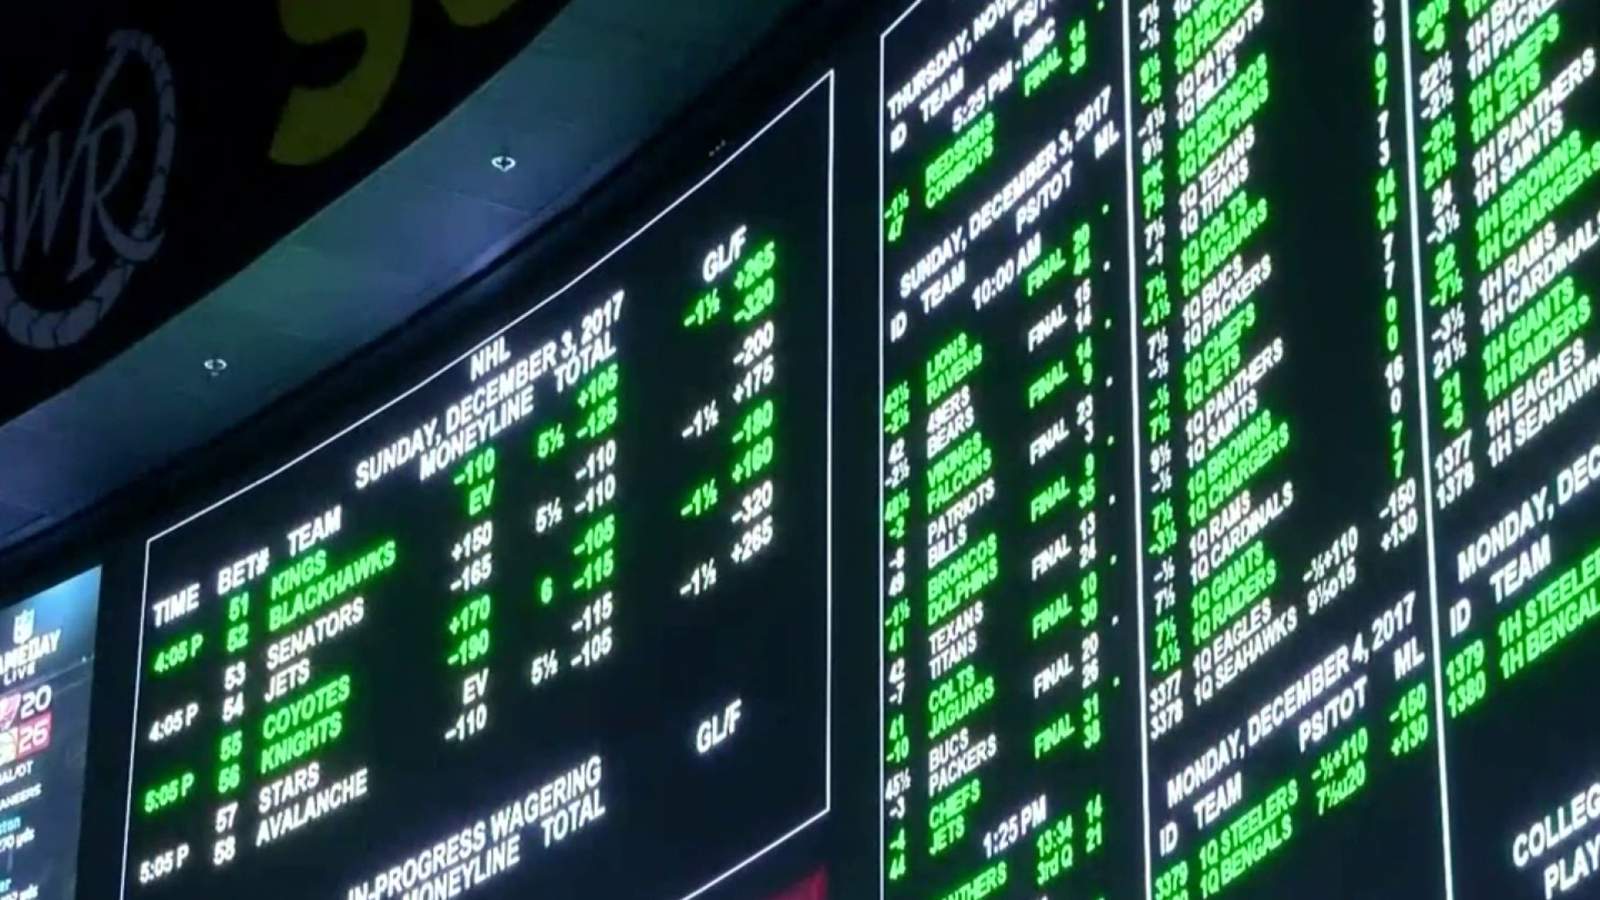 Online sports betting to begin in Michigan on Jan. 22